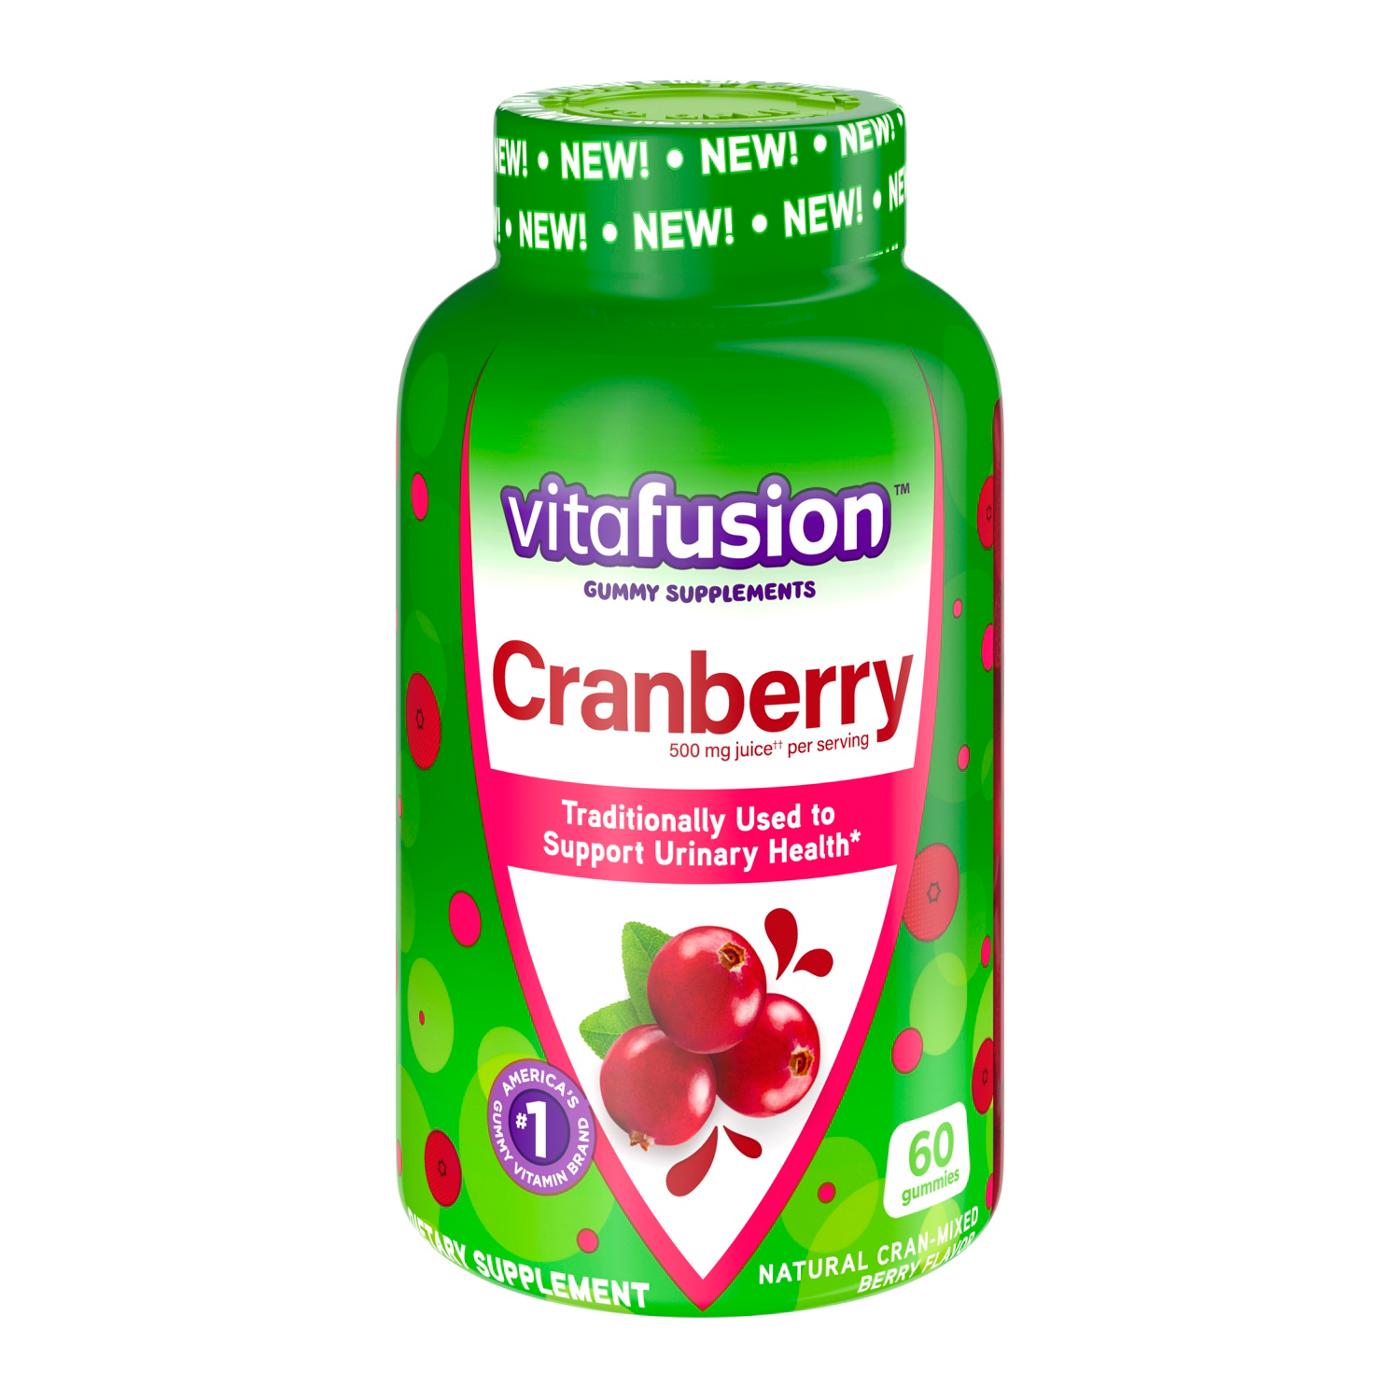 Vitafusion Cranberry Gummies; image 1 of 3